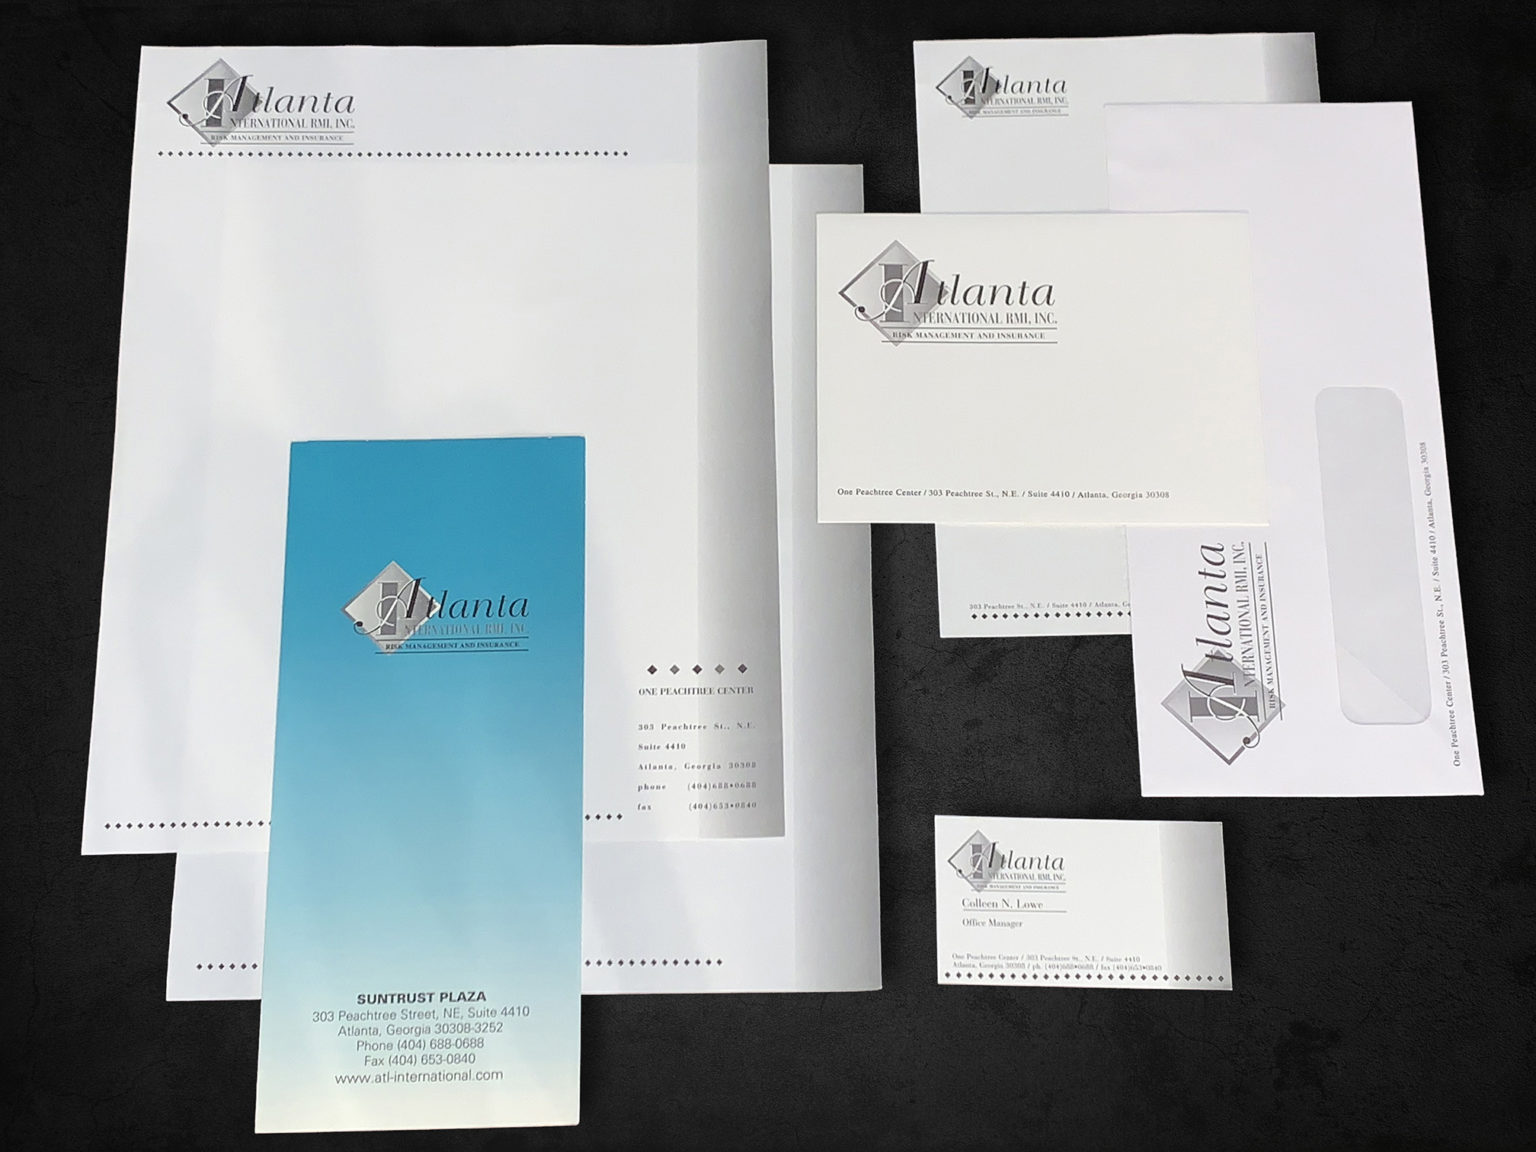 Atlanta International RMI Corporate Identity and Letterhead • Designed by: Designs In Motion, Inc.